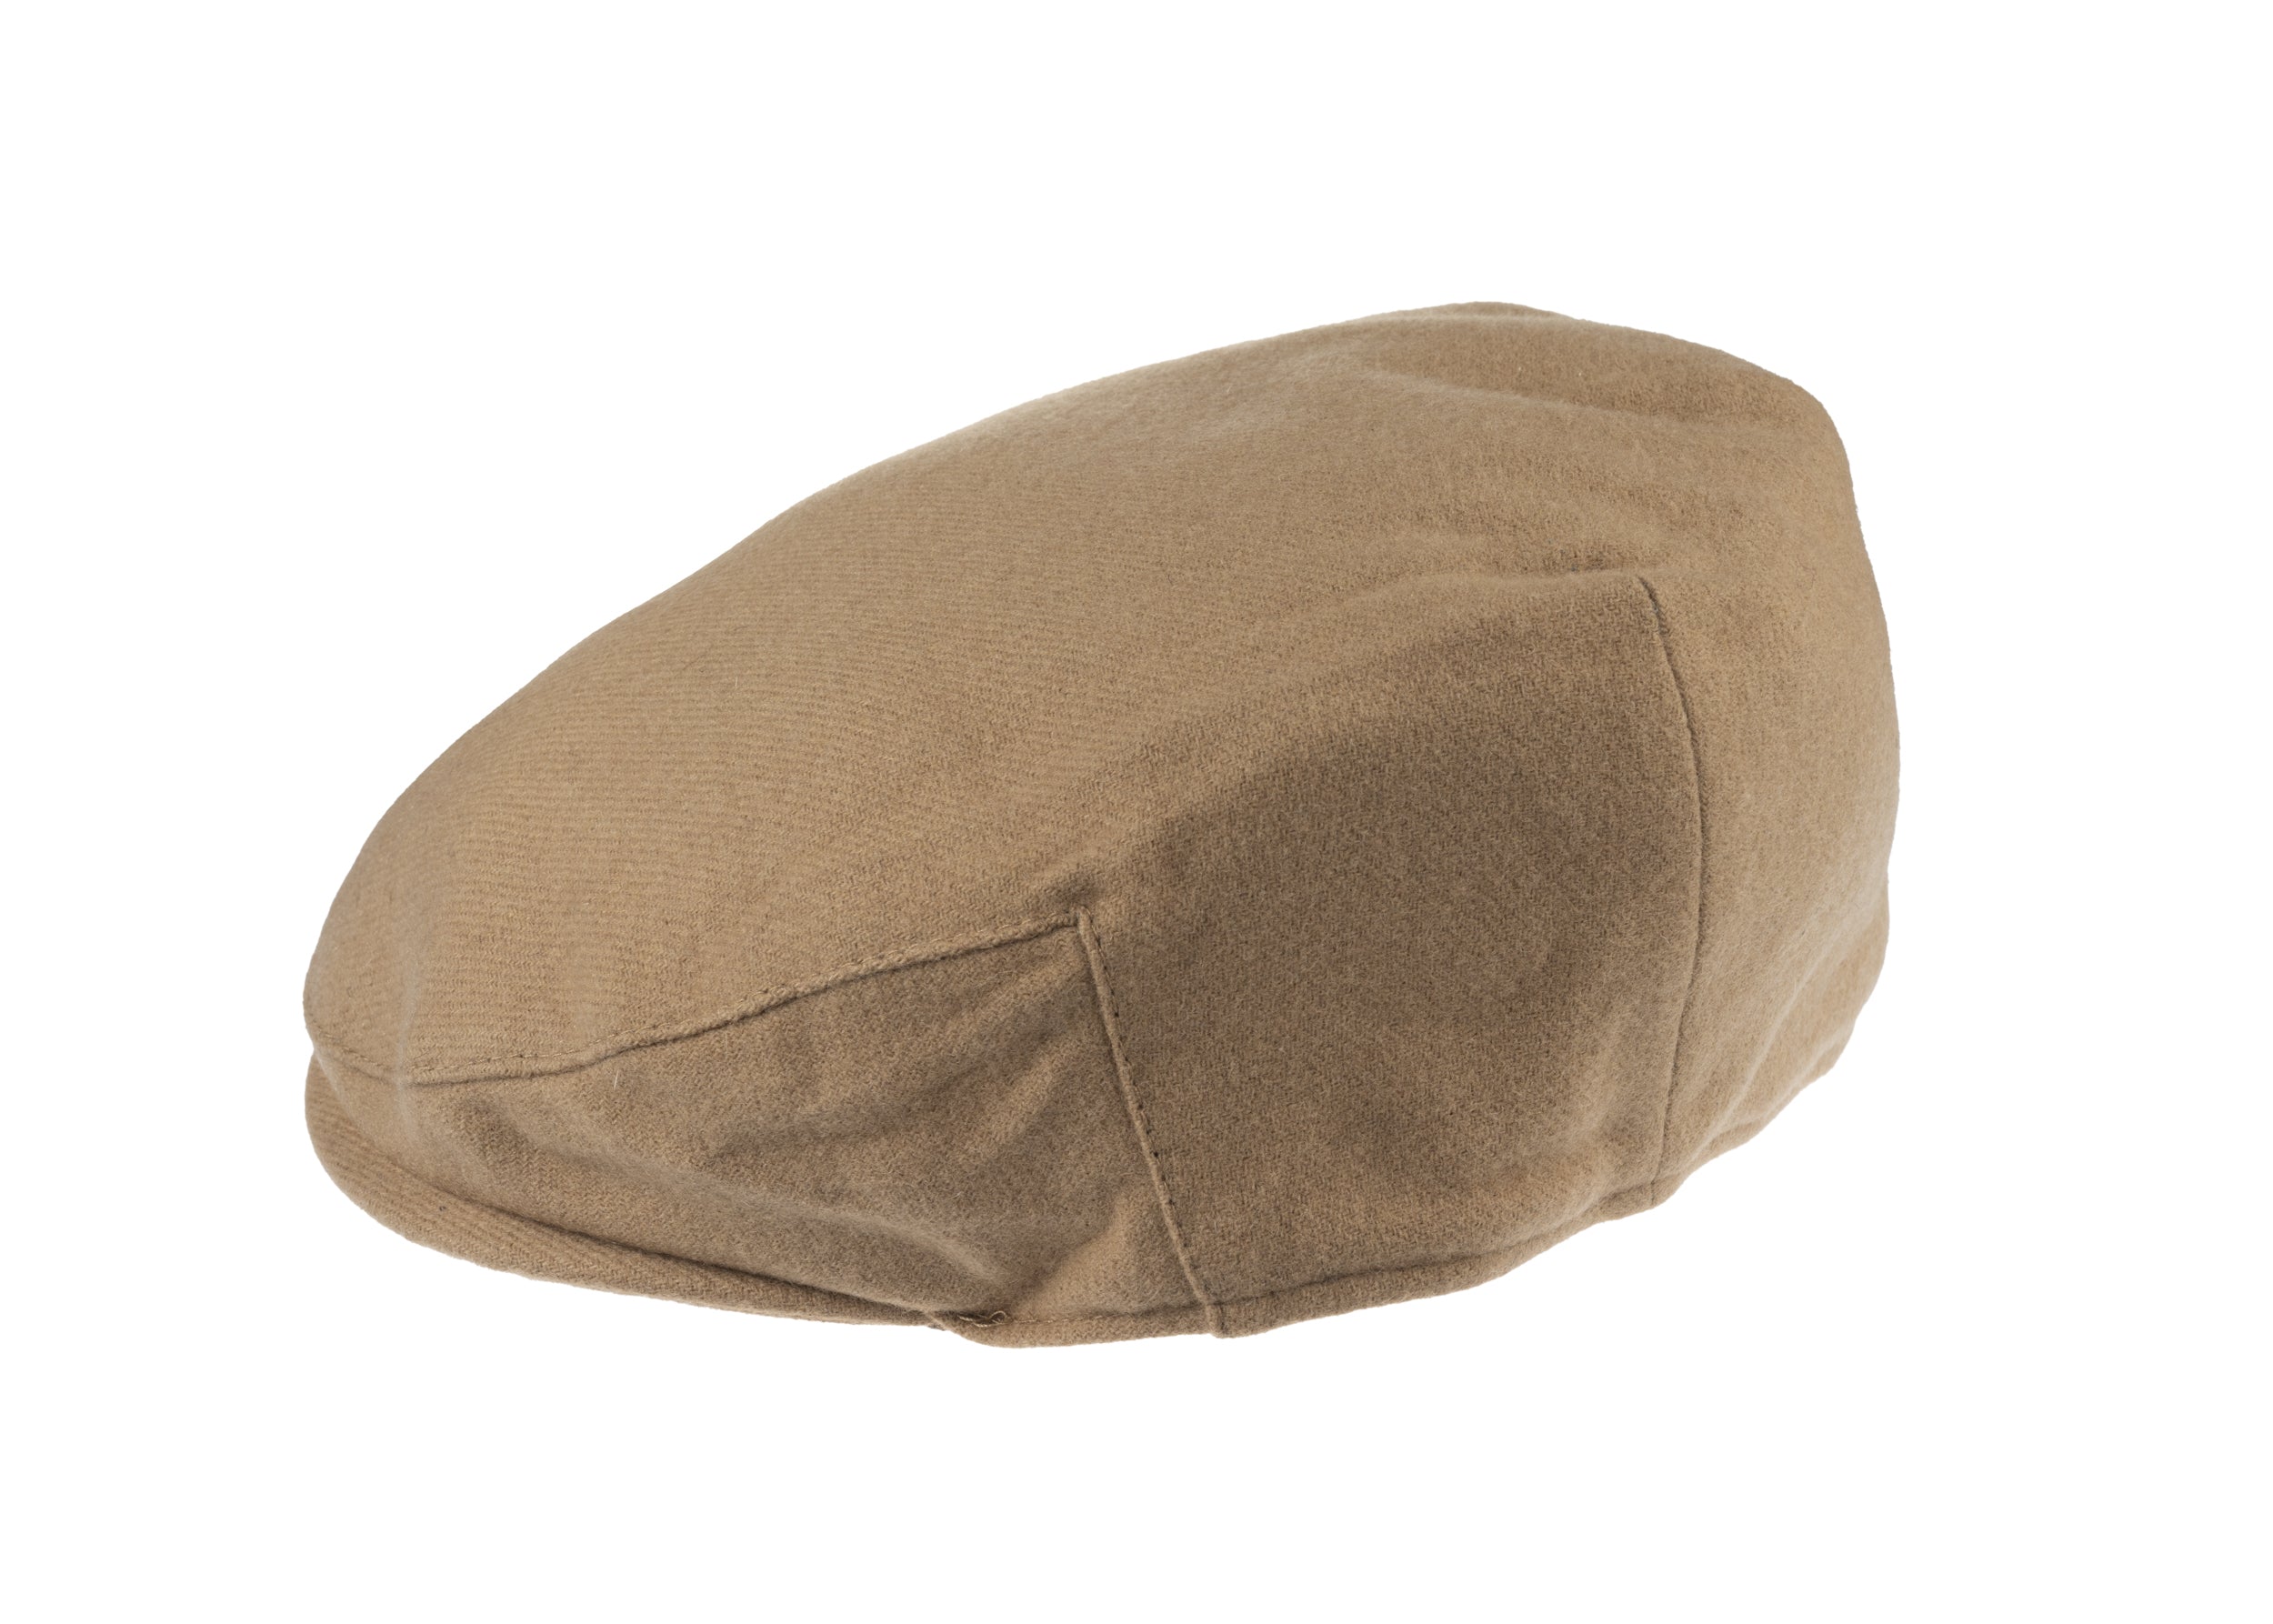 Josh balmoral flat cap in cashmere/wool blend fabric in Camel